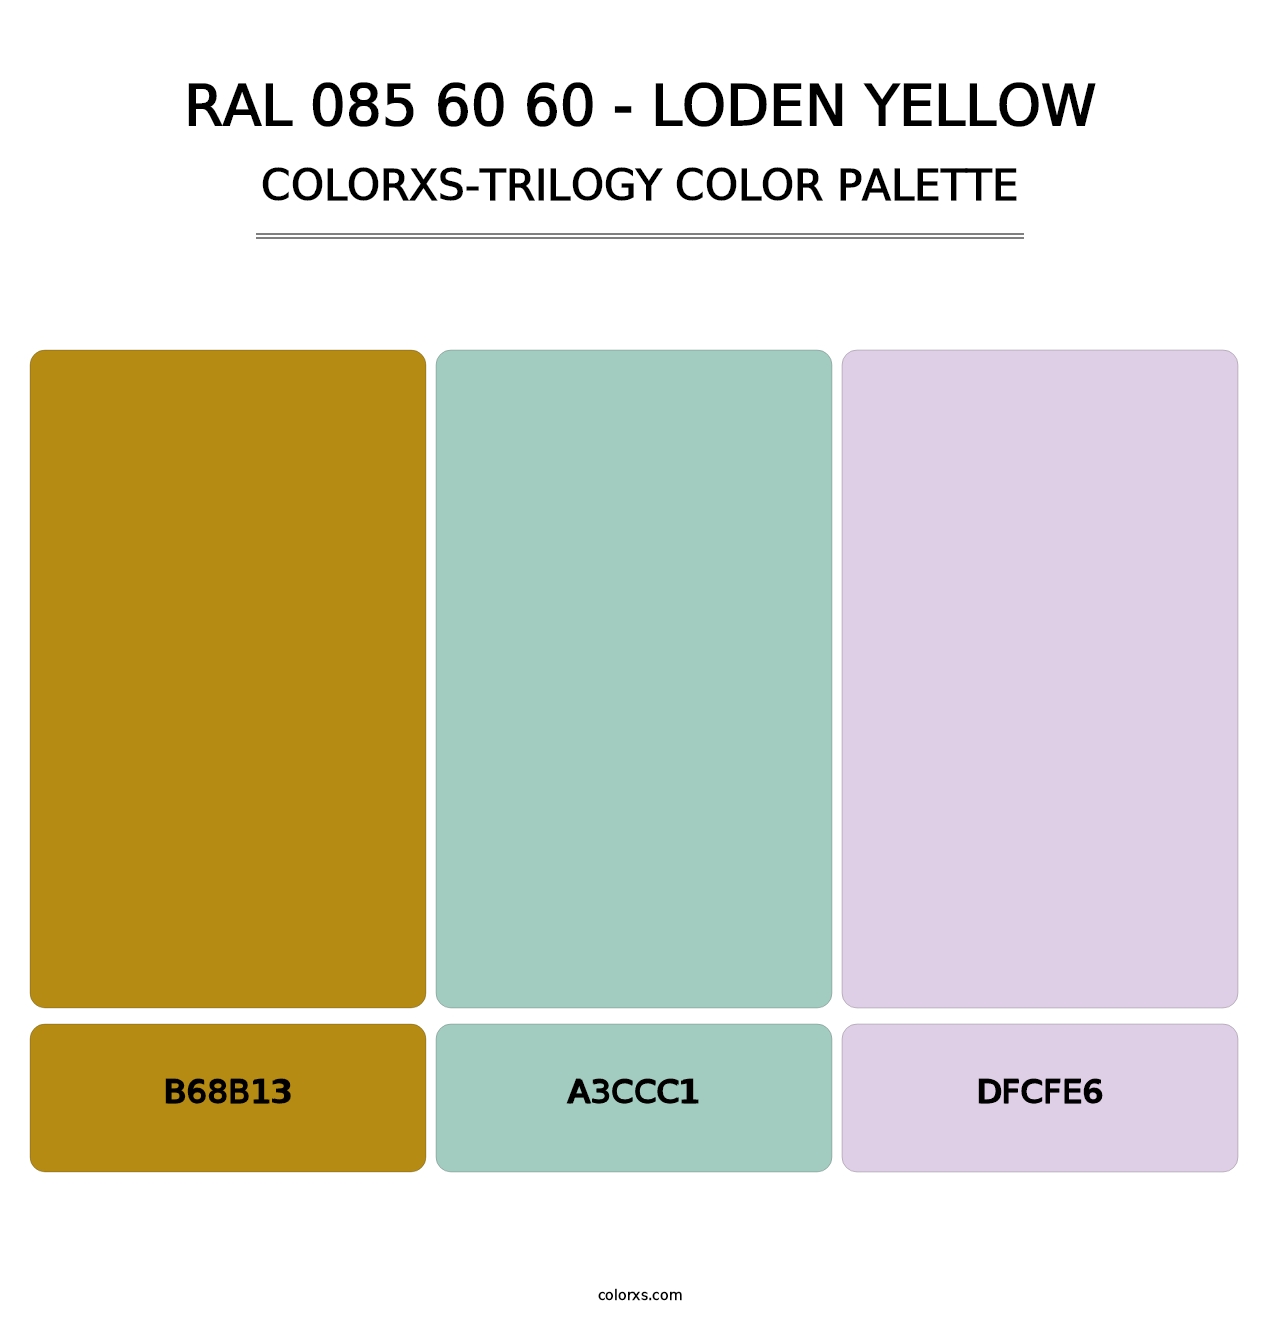 RAL 085 60 60 - Loden Yellow - Colorxs Trilogy Palette